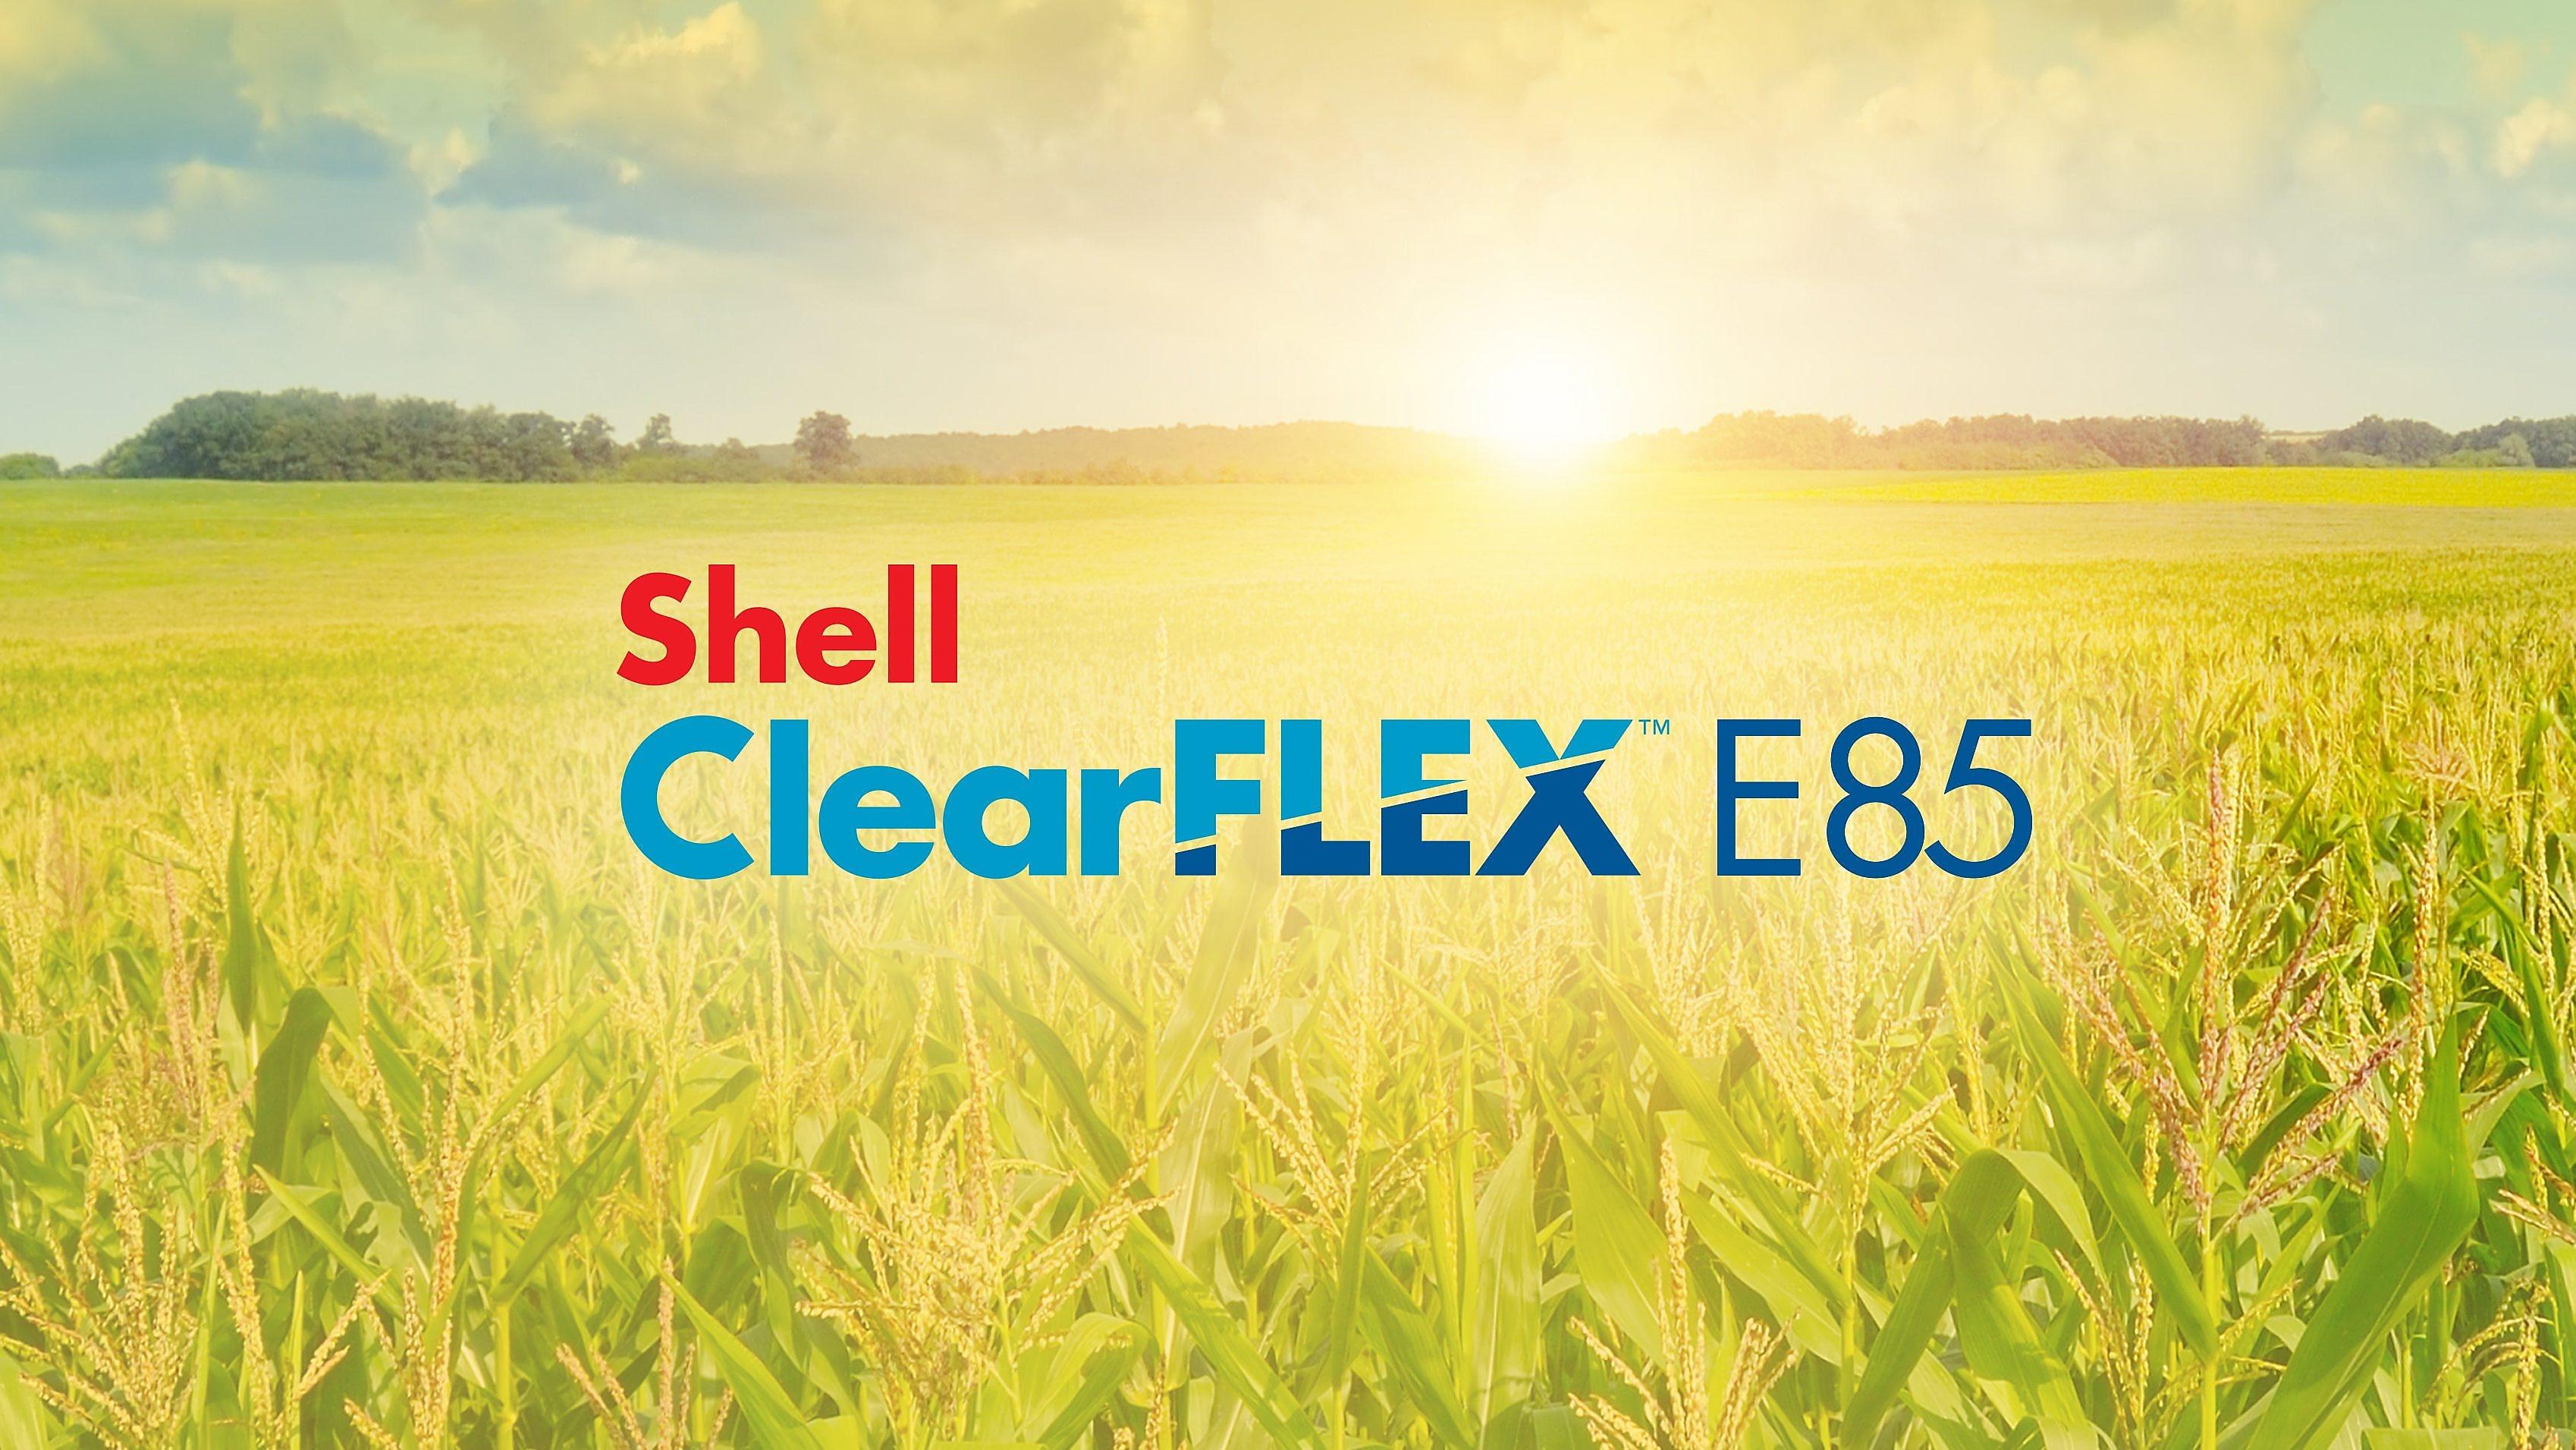 Shell ClearFLEX E85 | Shell United States